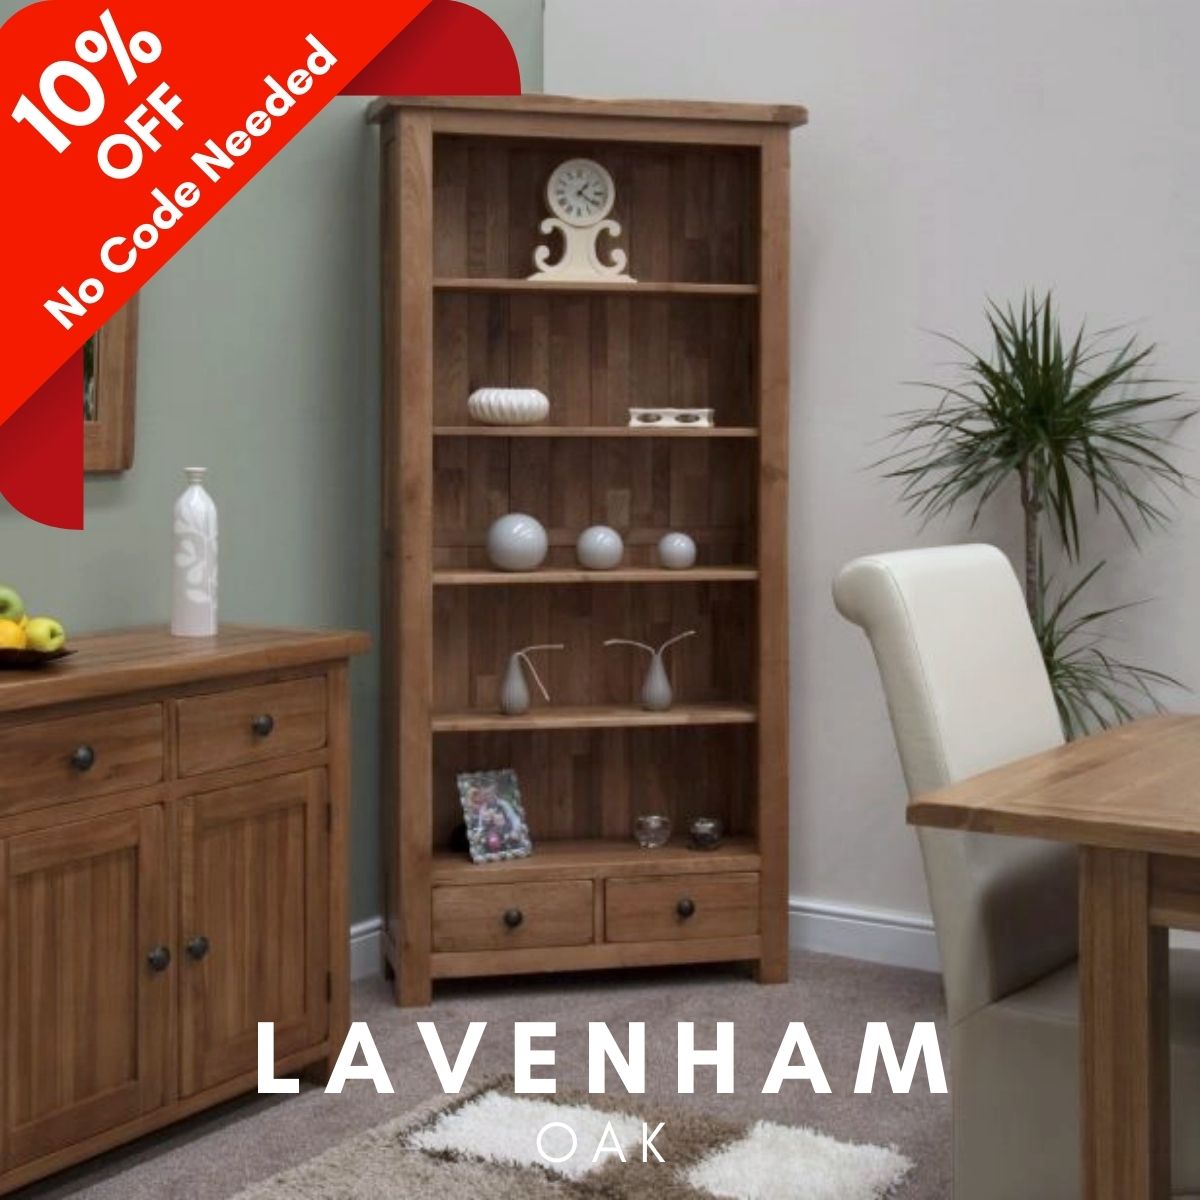 Lavenham January sale. Edmunds & Clarke